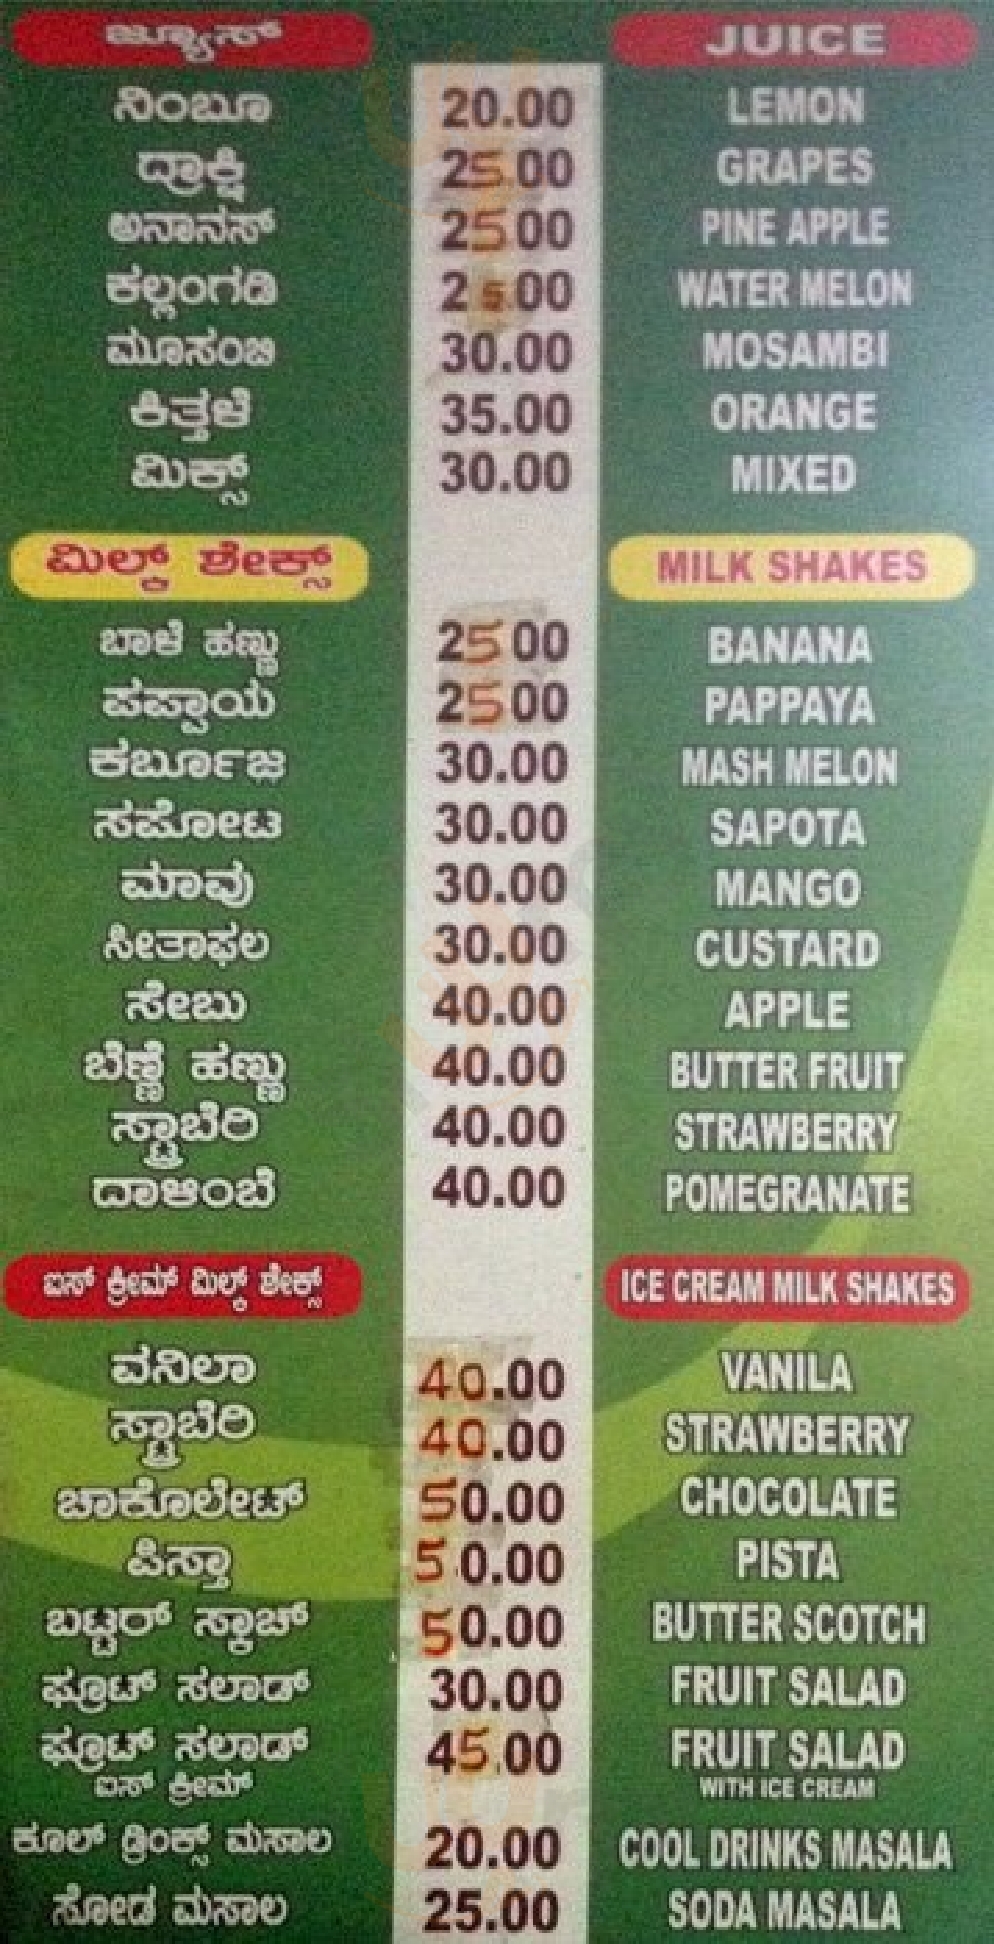 Om Ganesh Fruit Juice Center Bengaluru Menu - 1